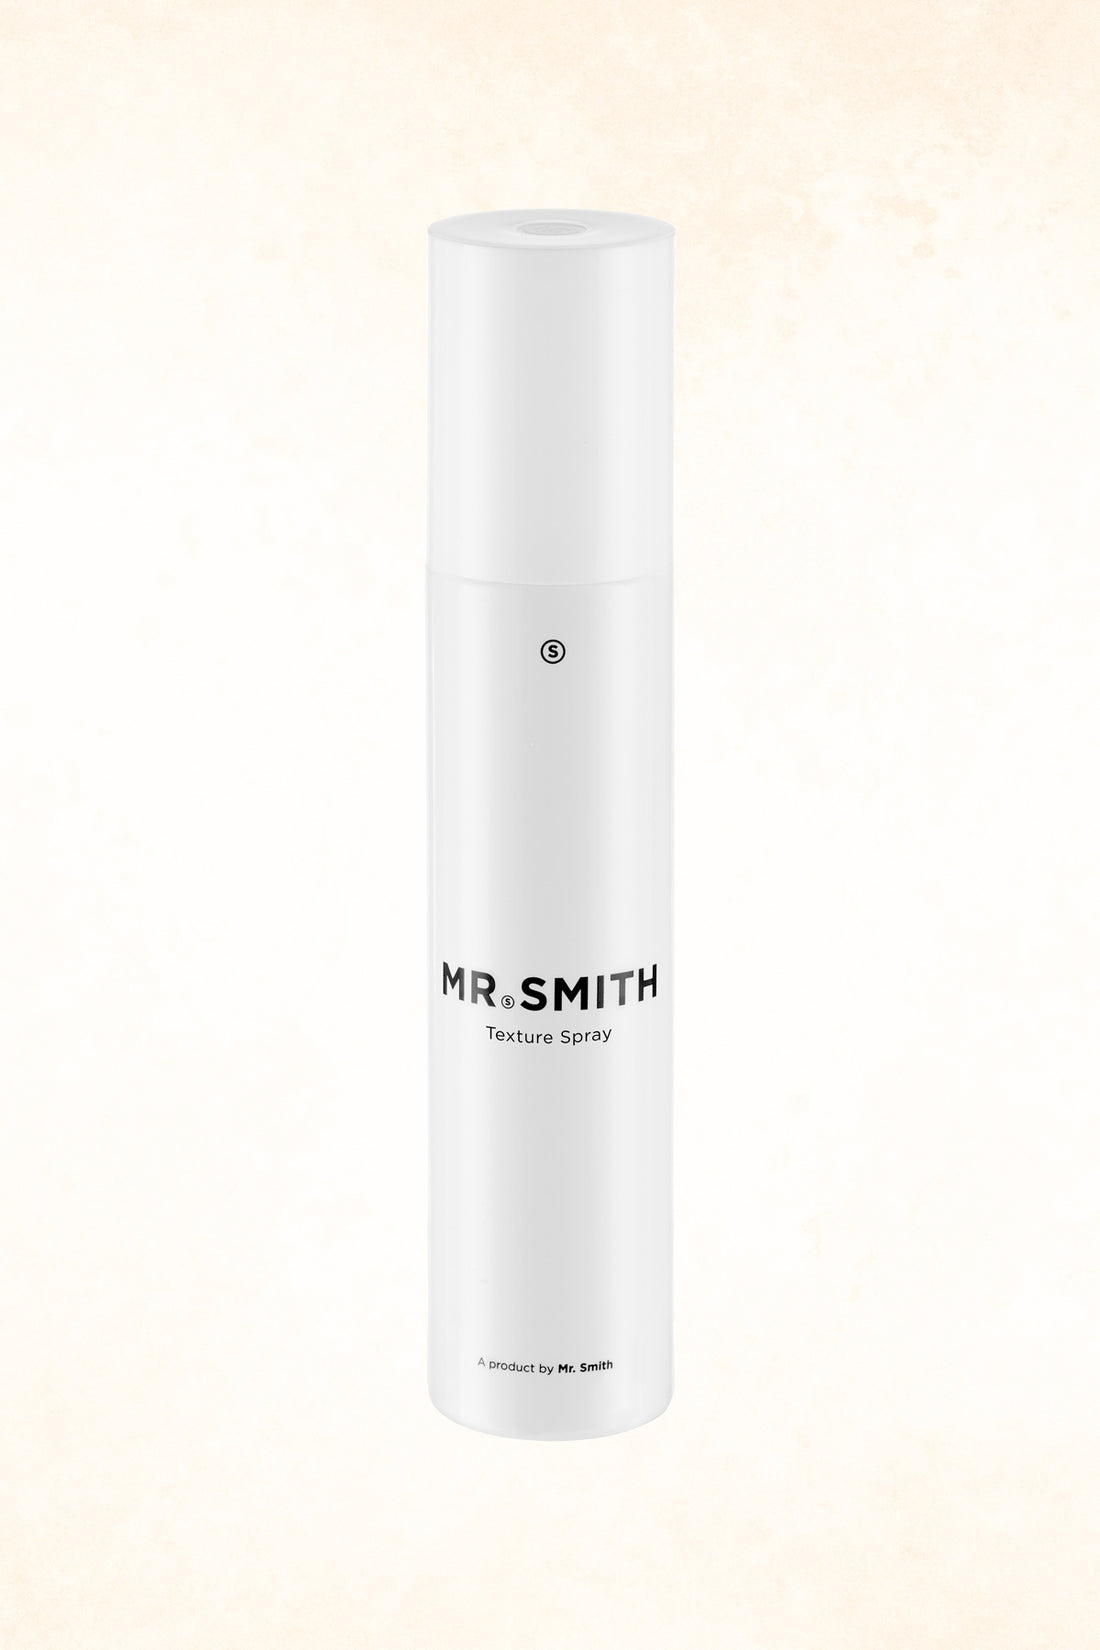 Mr Smith – Texture Spray – 200 g